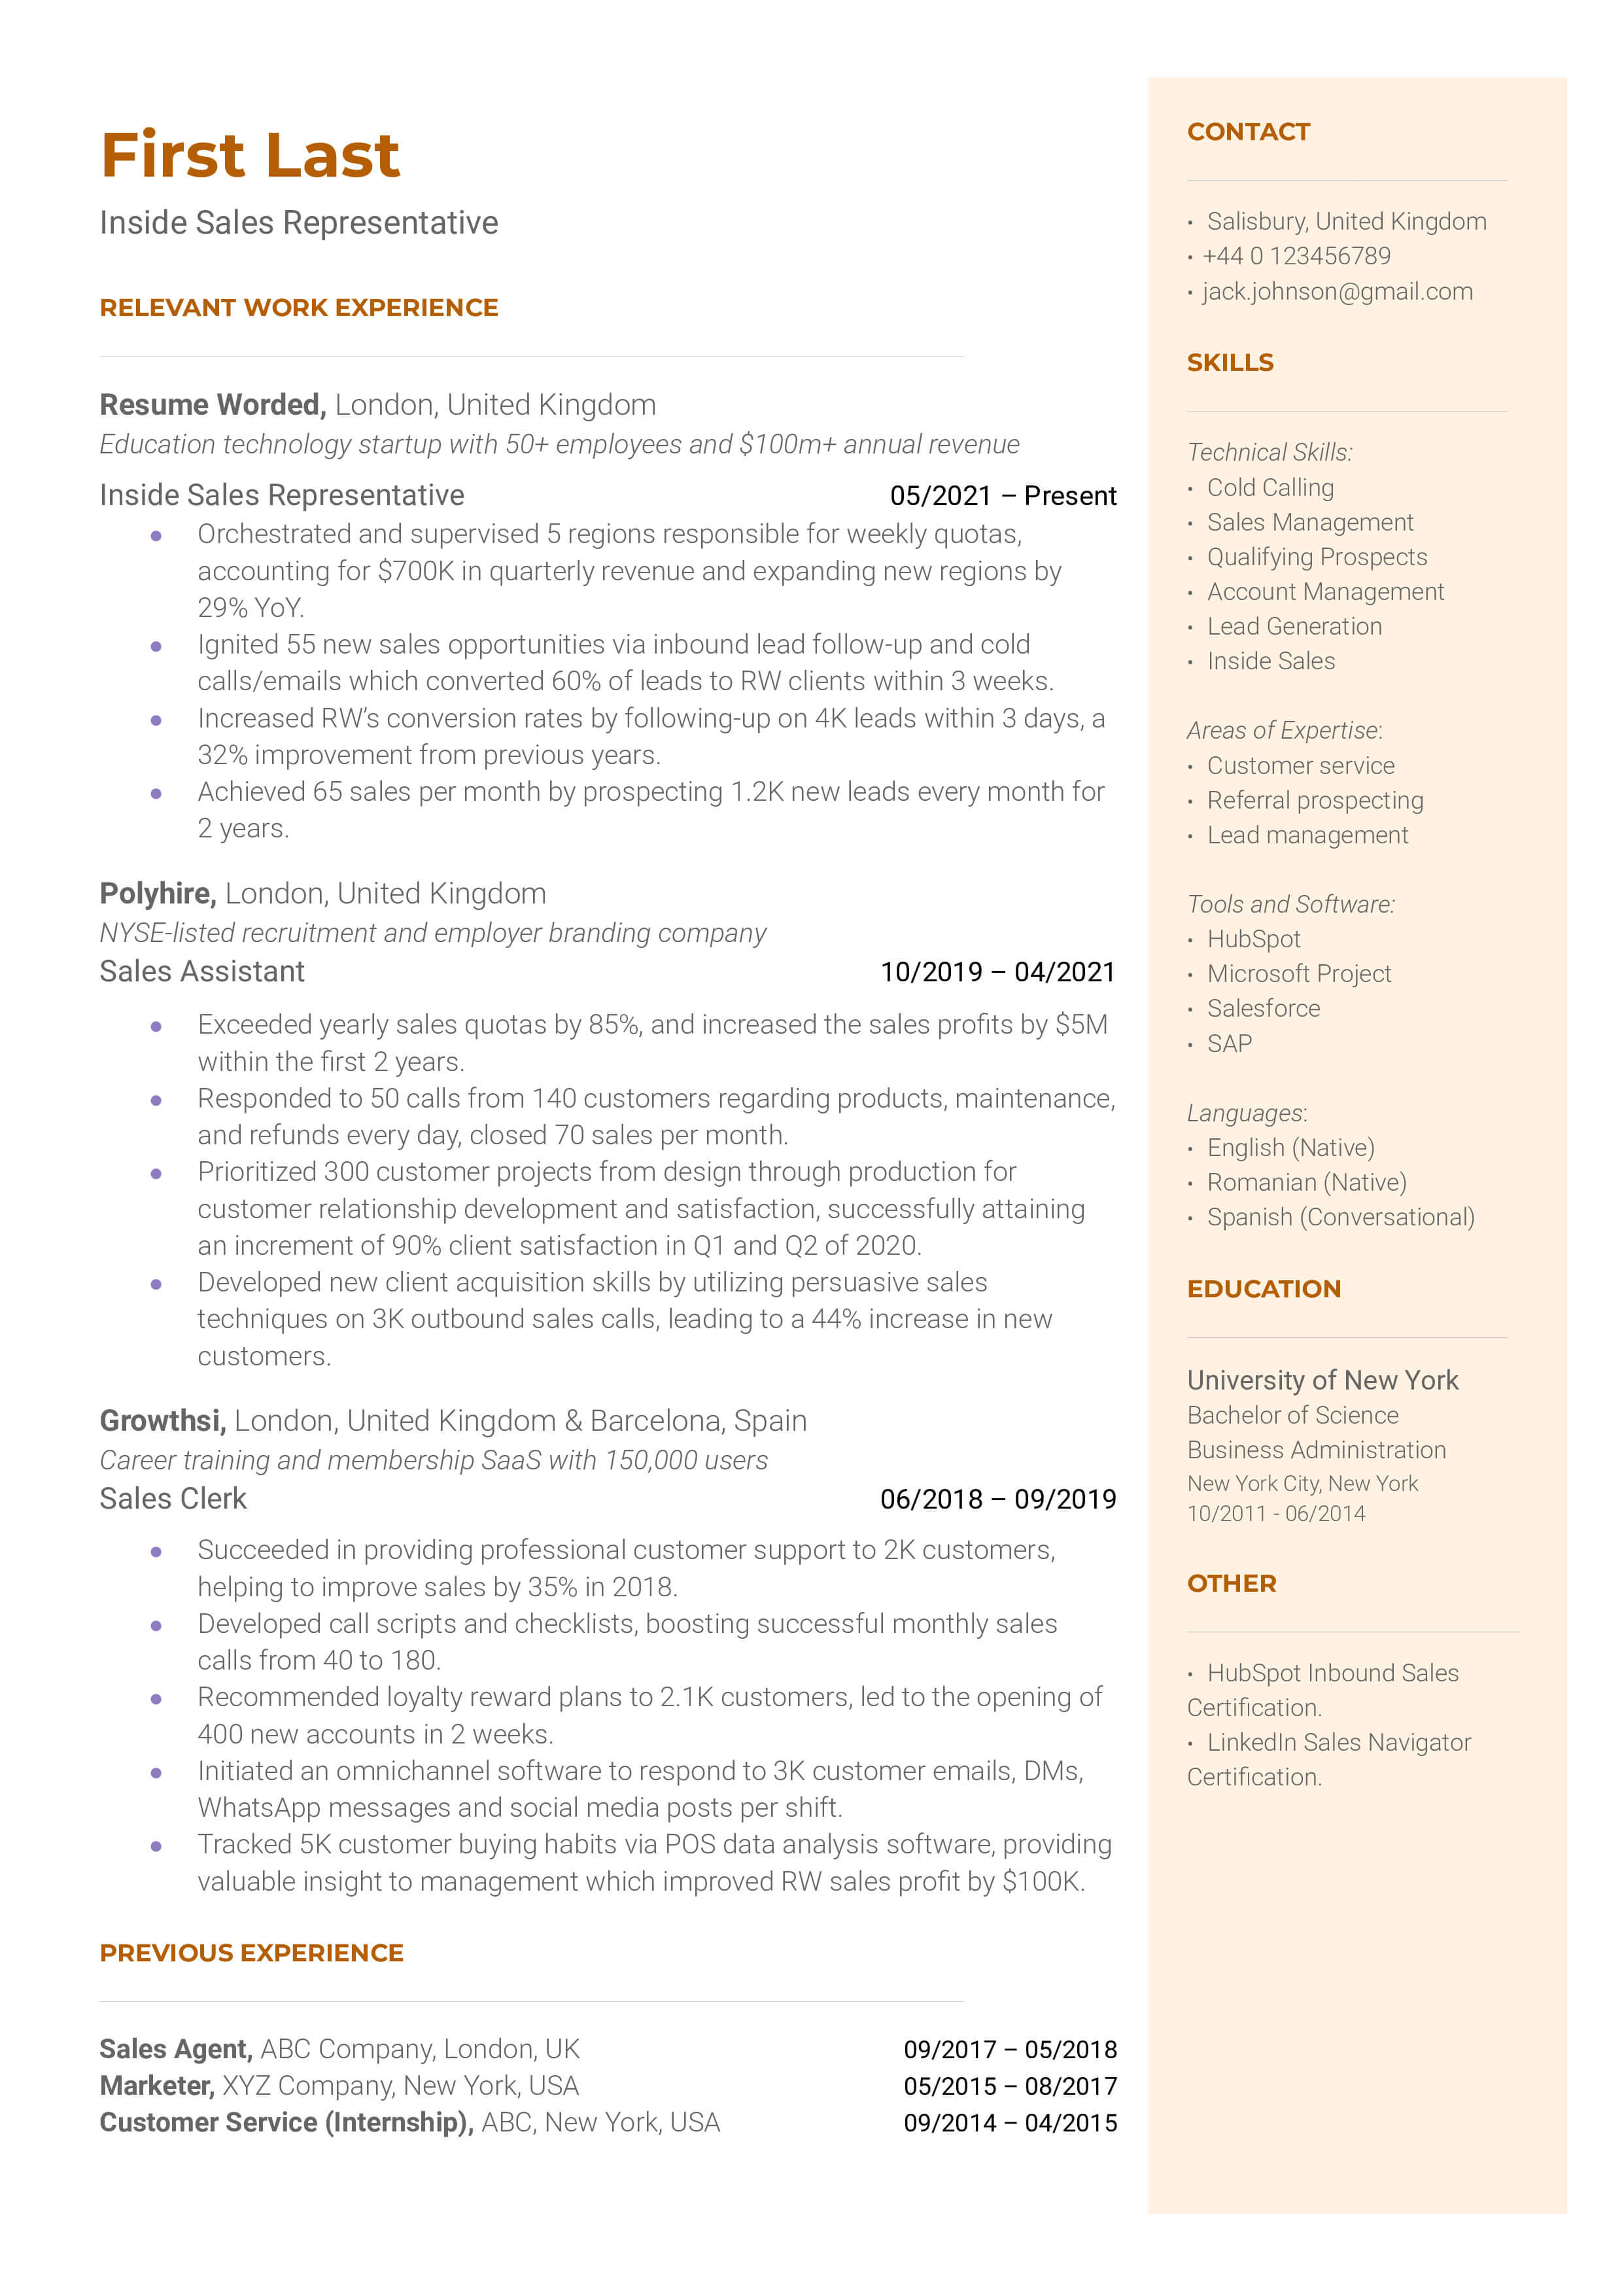 A CV screenshot showcasing job experience and skills relevant for Inside Sales Representatives.